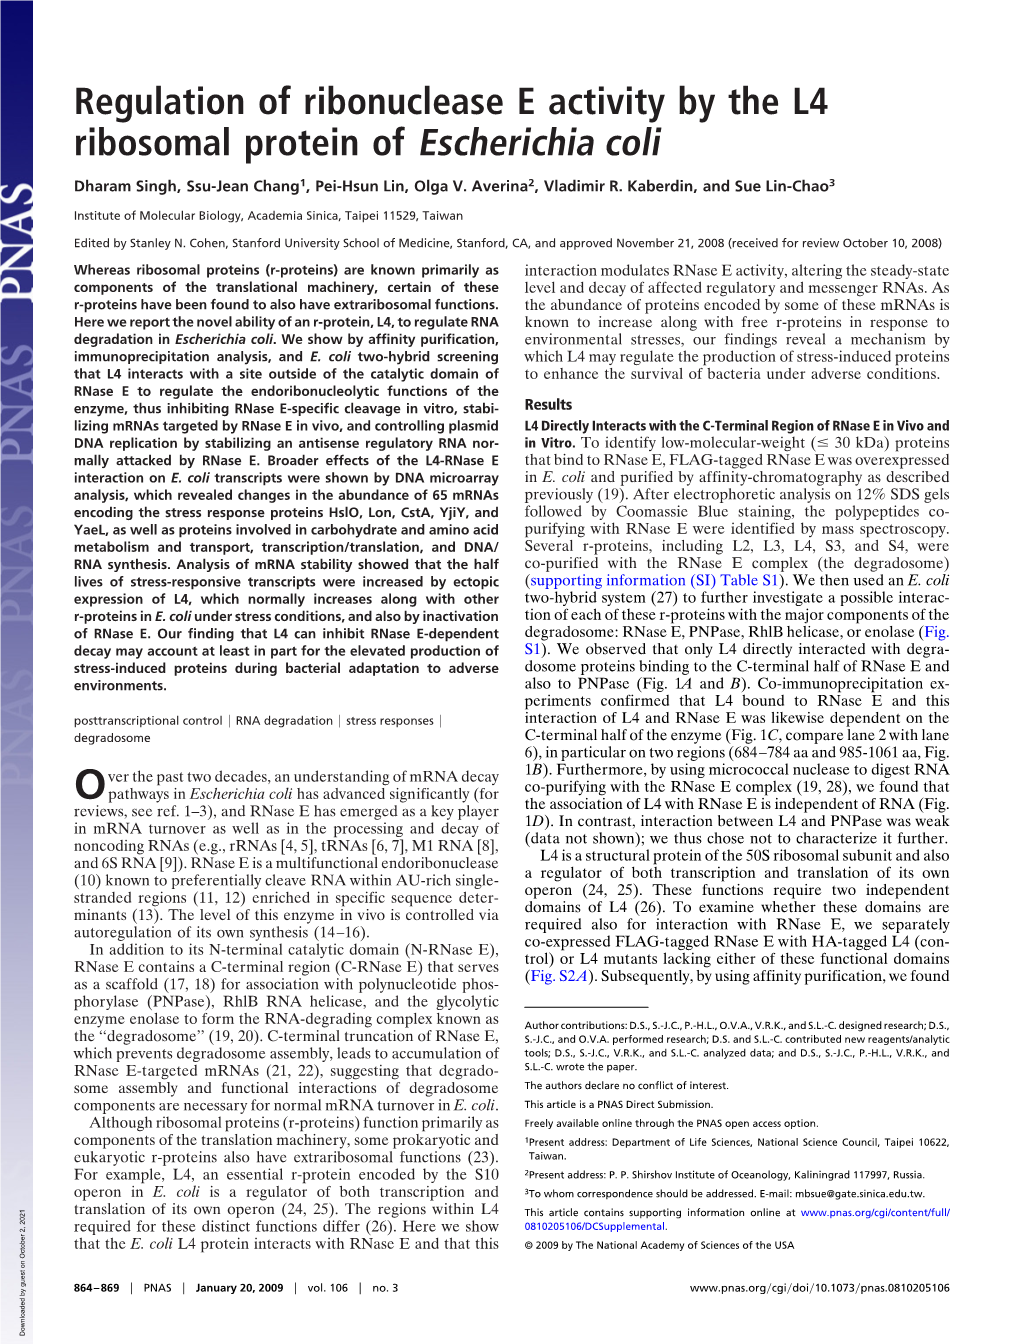 Regulation of Ribonuclease E Activity by the L4 Ribosomal Protein of Escherichia Coli